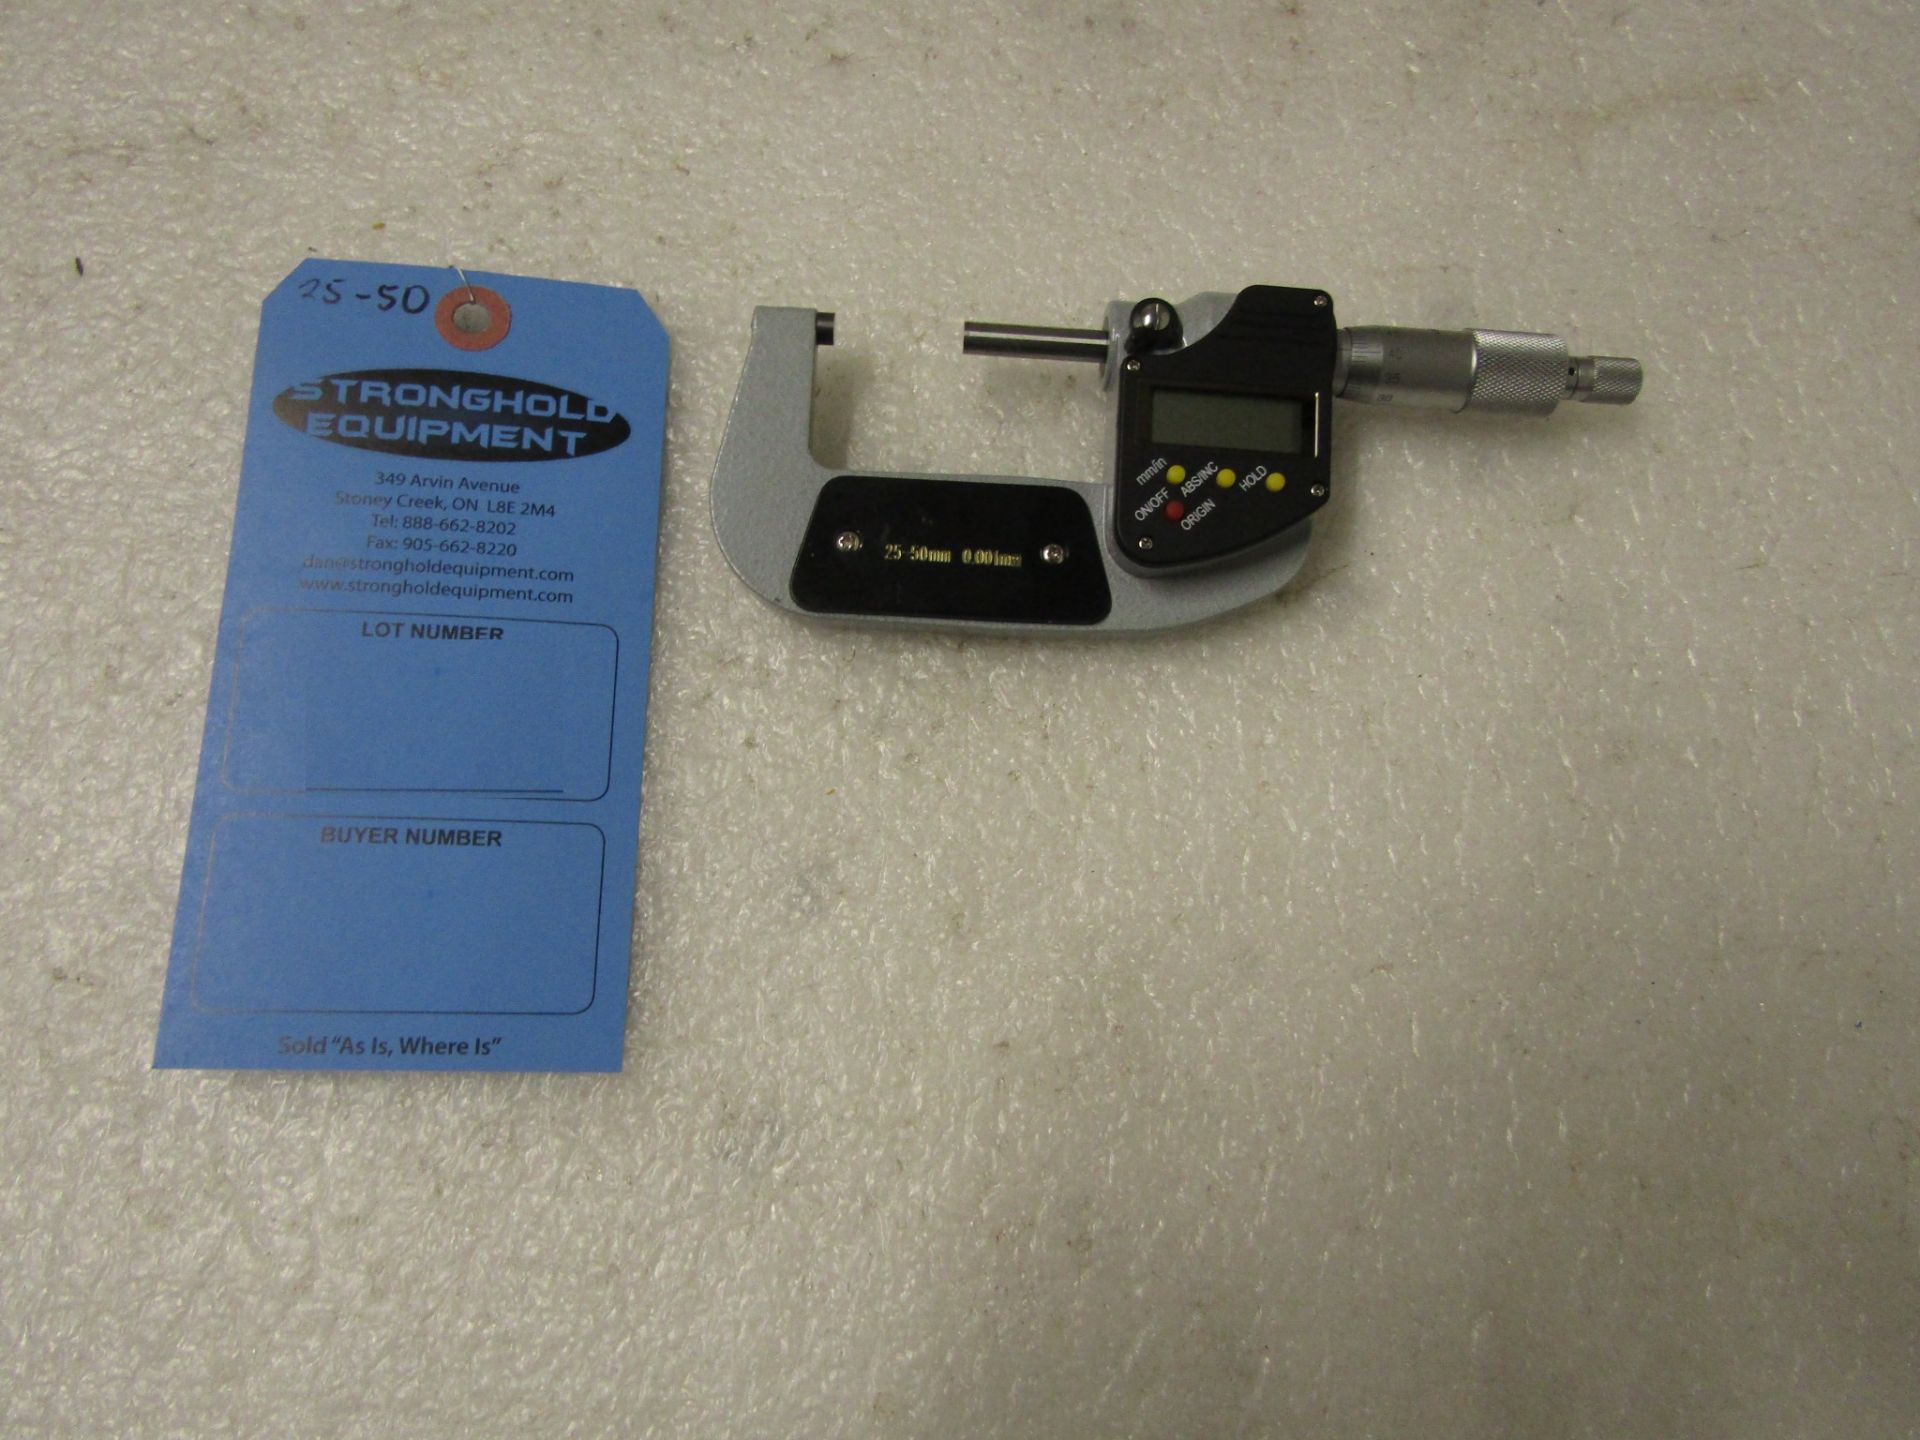 Mint 1-2"" / 25-50mm Digital Micrometer in case BRAND NEW